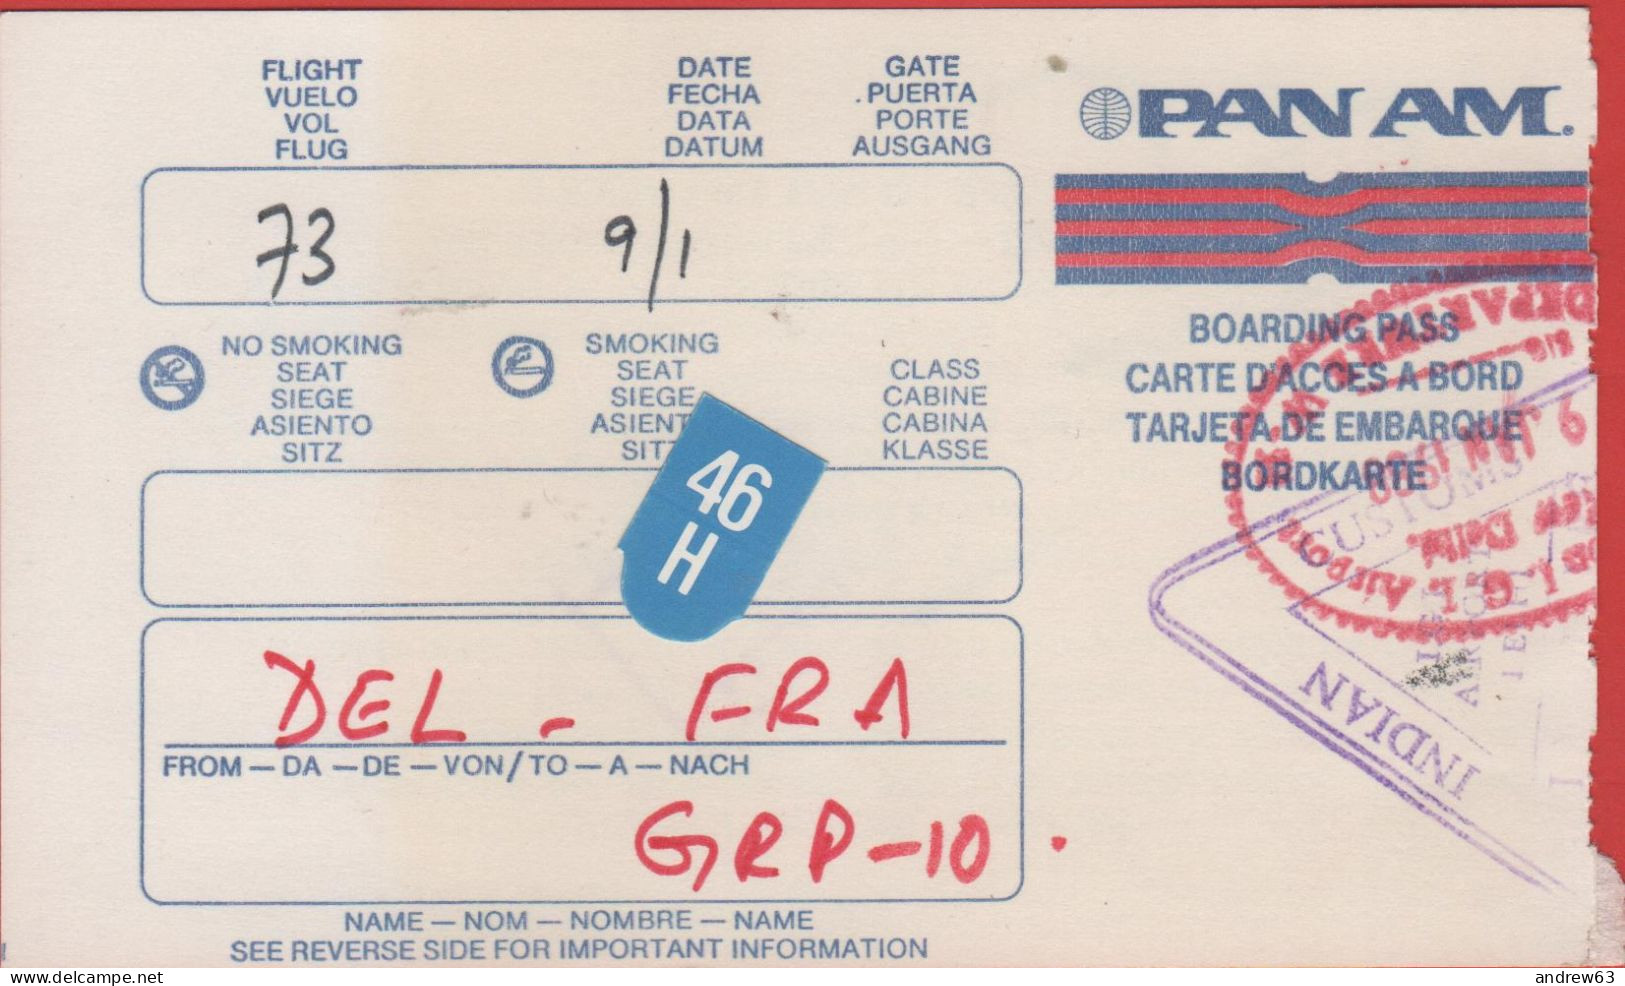 USA - PAN AM - DEL-FRA - Carta D'Imbarco - Boarding Pass - Mundo